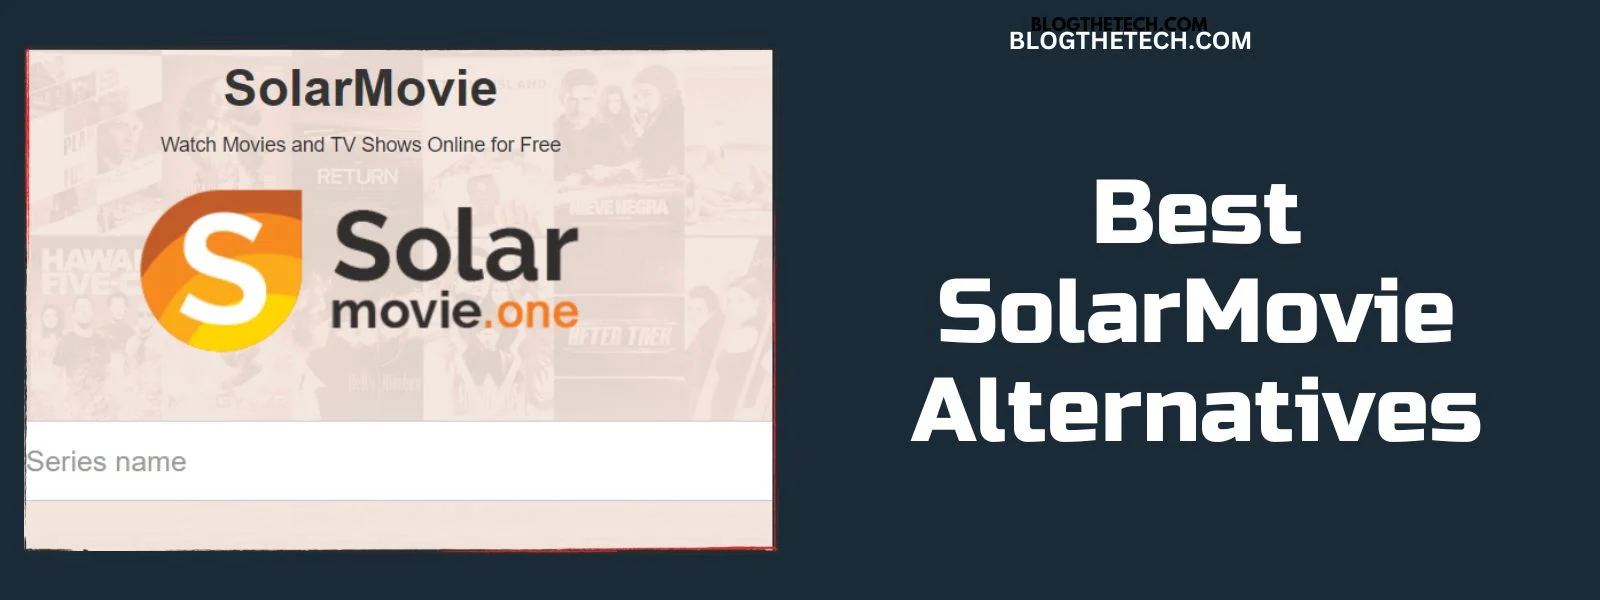 Best SolarMovie Alternatives